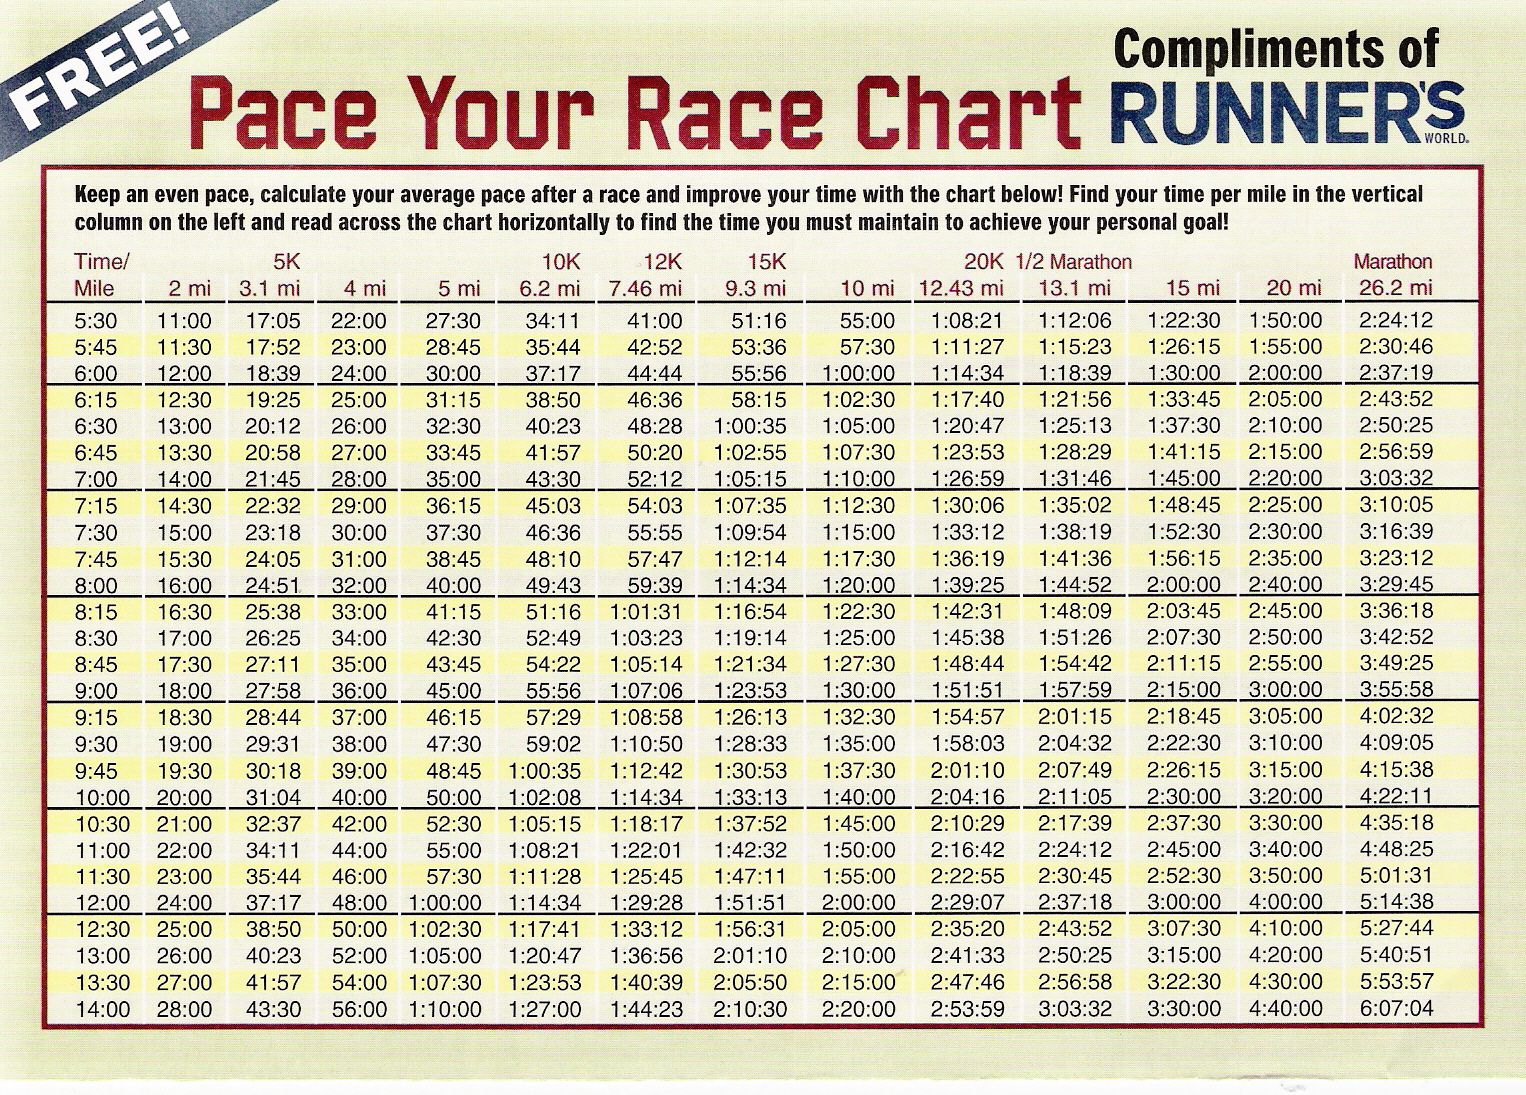 Marathon pace chart ready accordingly 5 30 14 min miles 